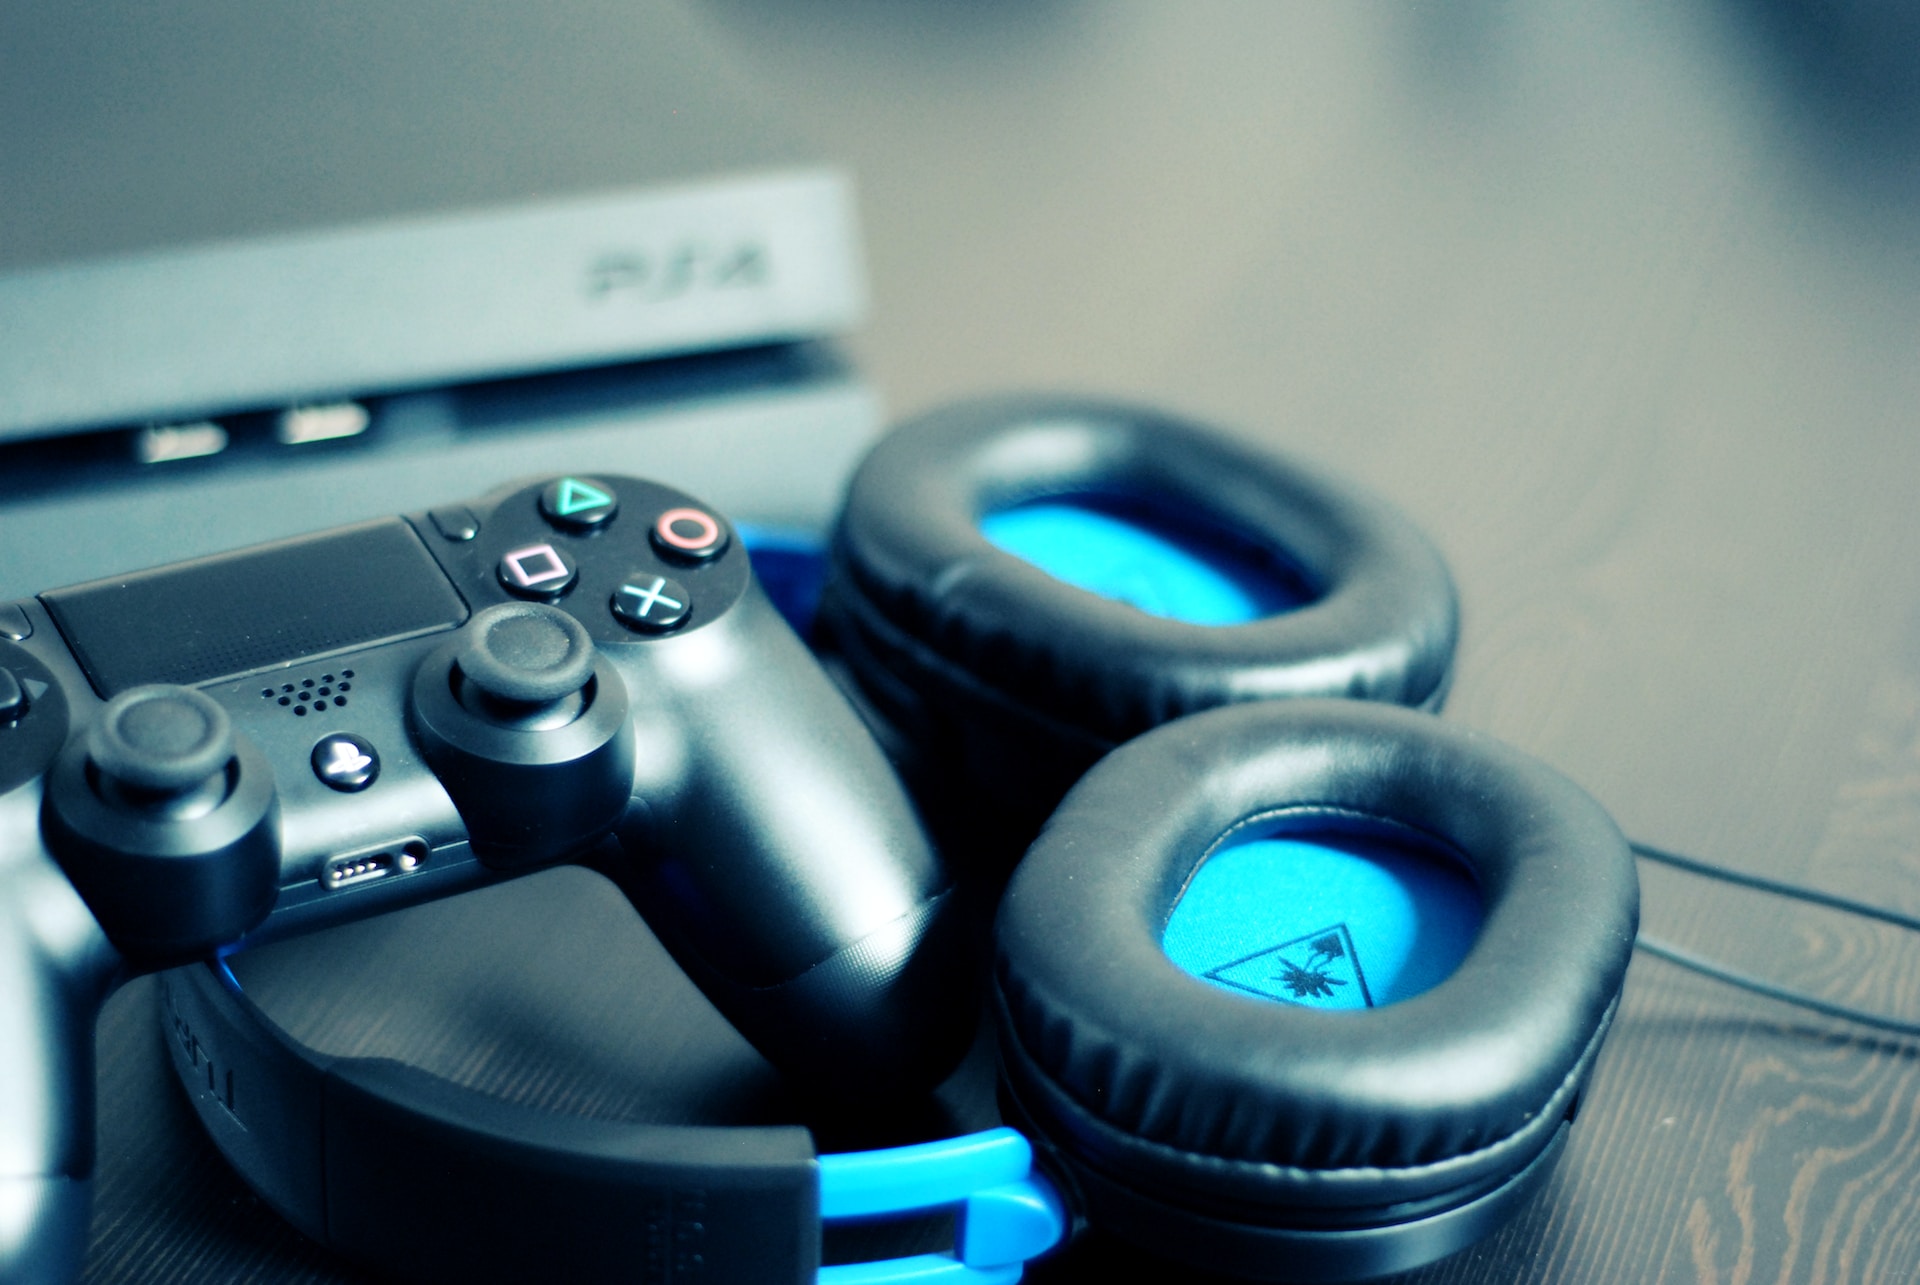 A PlayStation pad sitting on a blue headphone